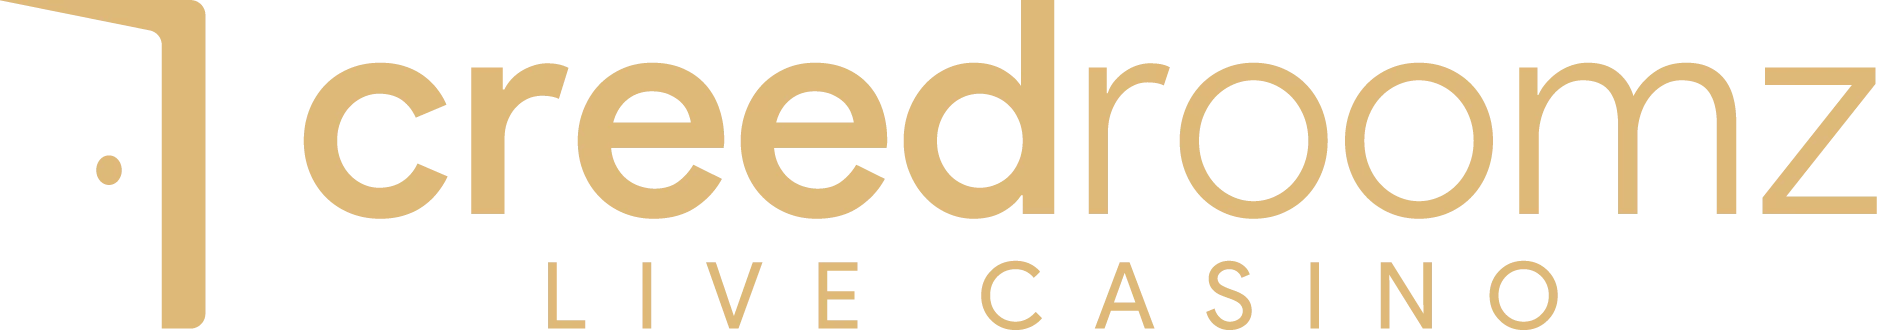 creedroomz-logo-gold